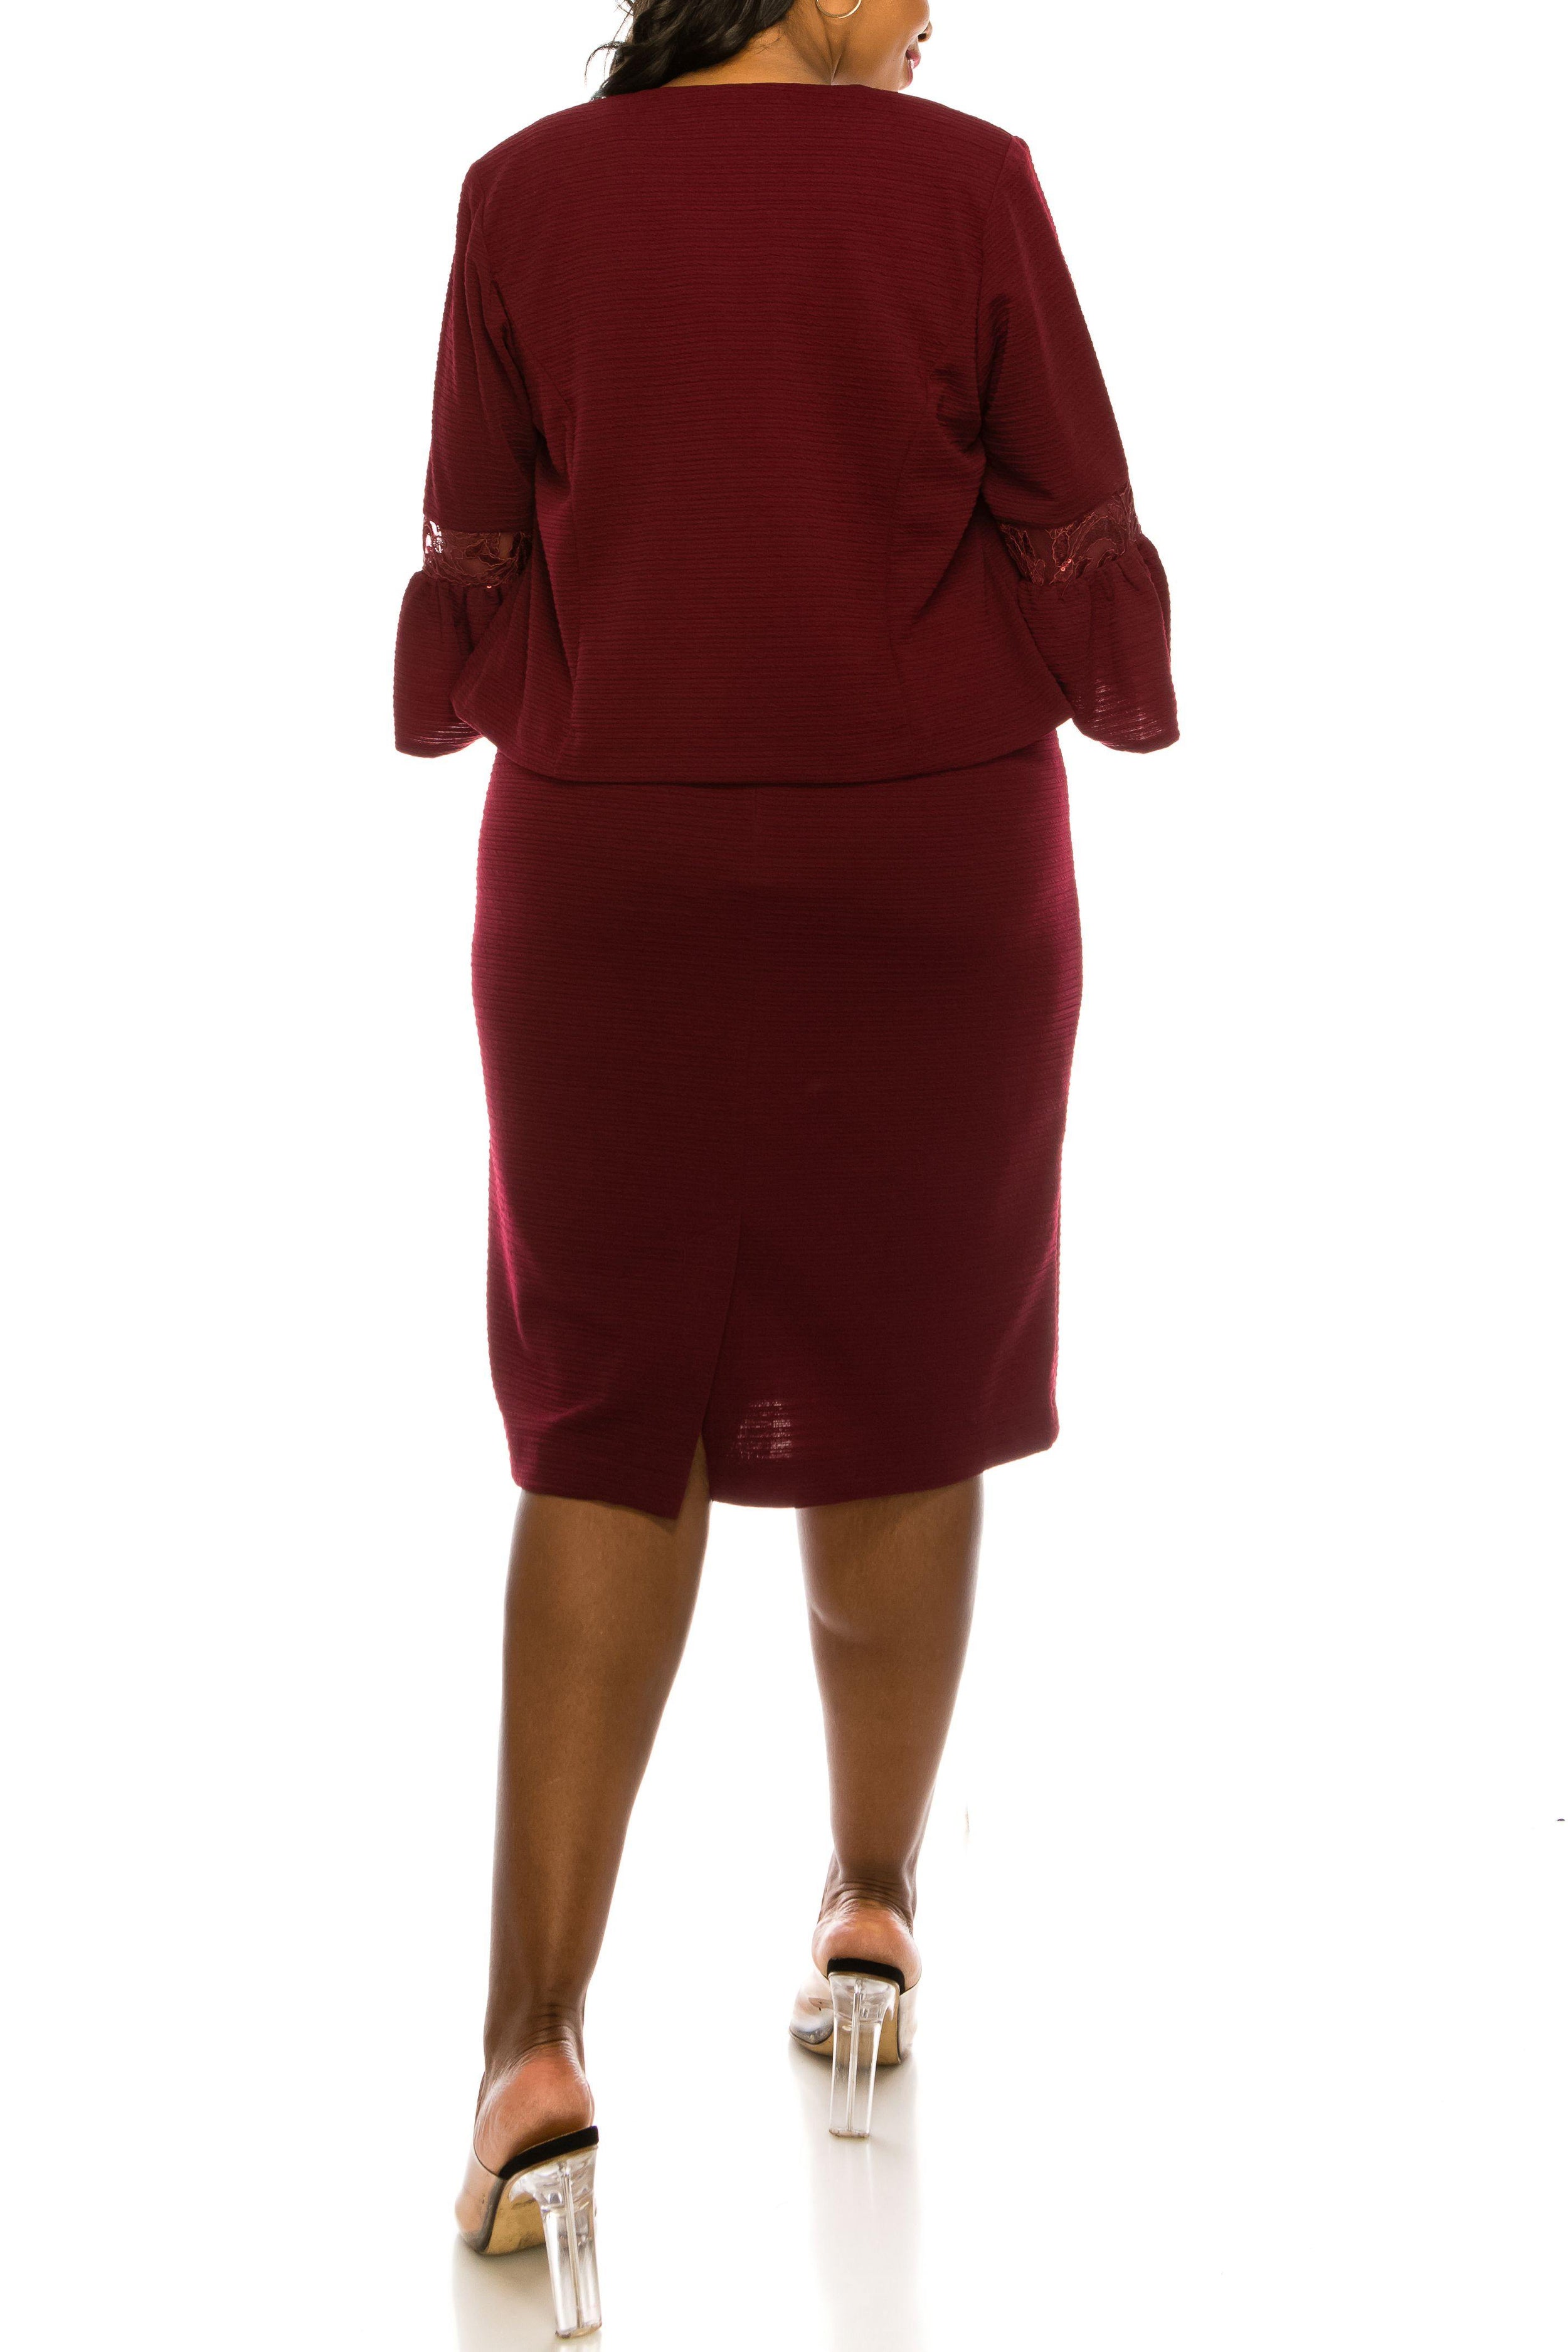 Maya Brooke Plus Size Short Jacket Dress 27927 - The Dress Outlet